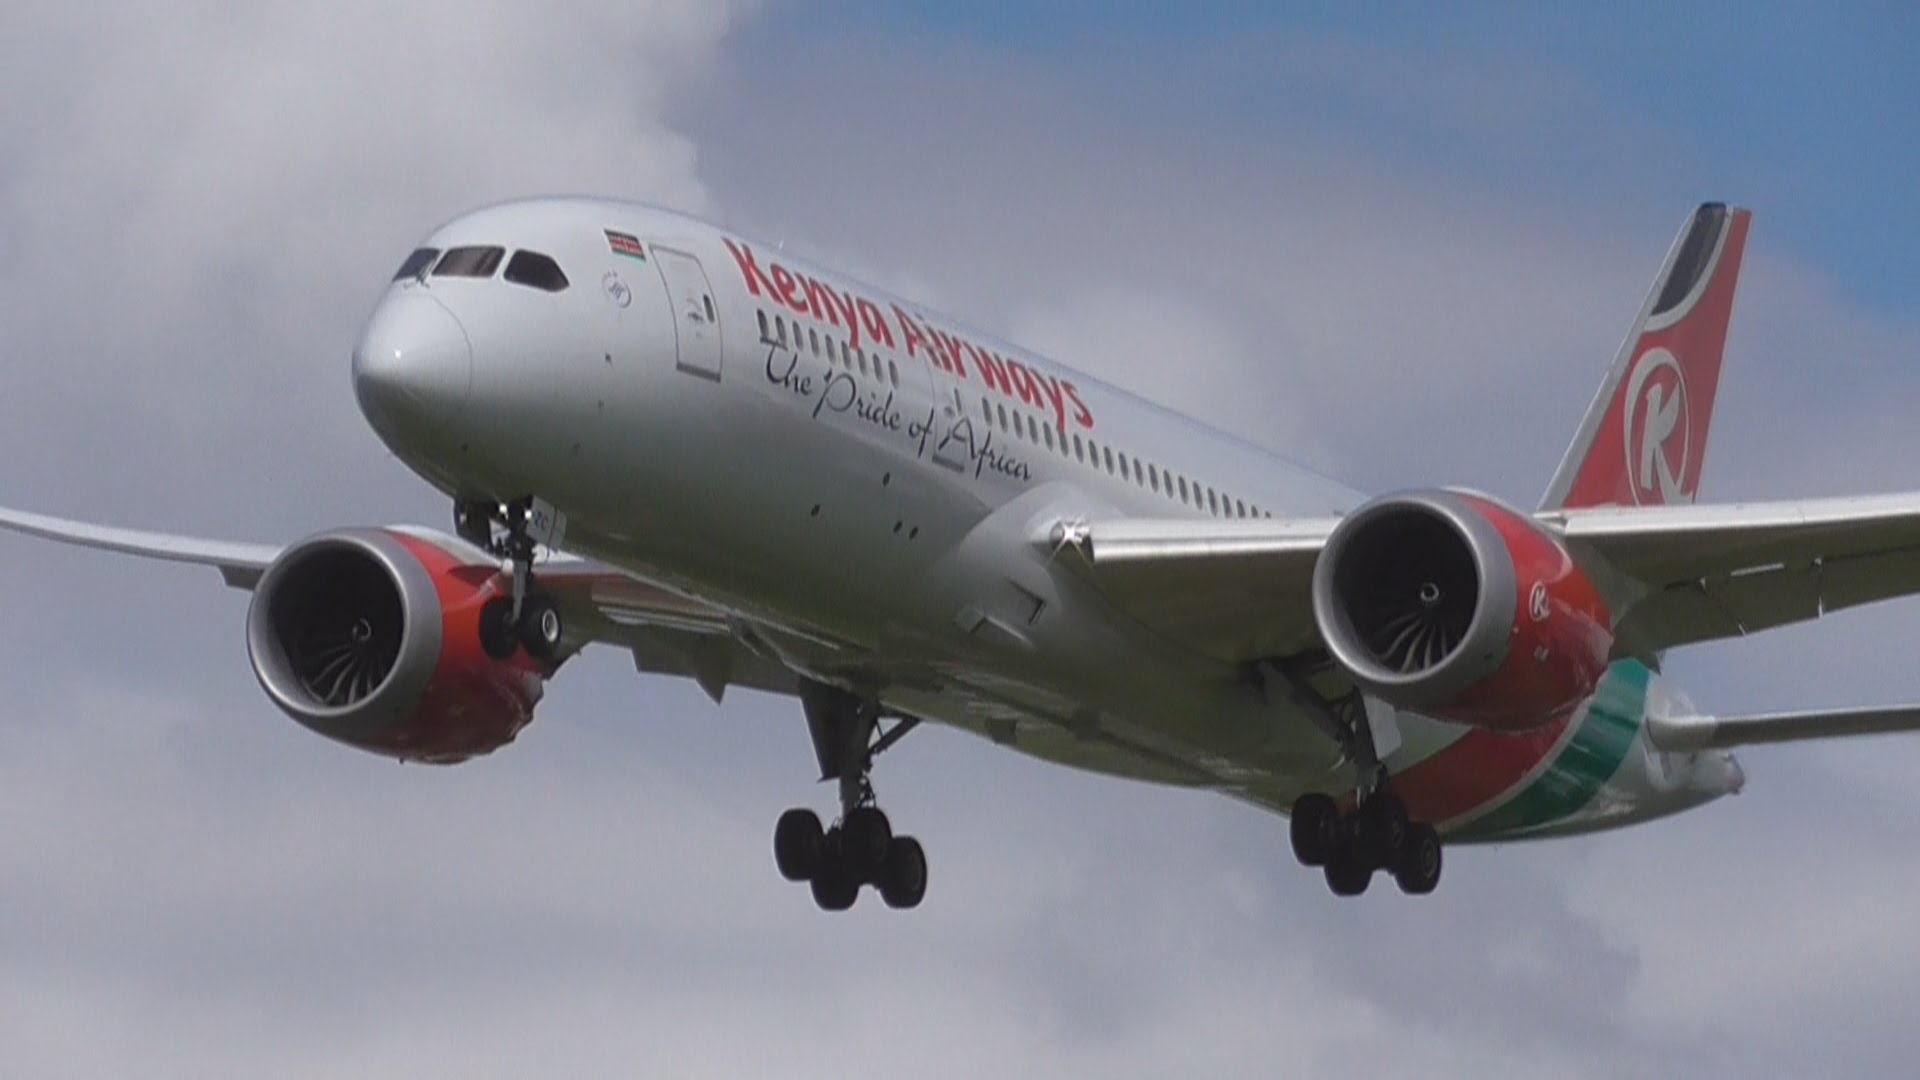 09x | Boeing 787 Dreamliner | RWY27L | Arrivals at London Heathrow Airport | LHR